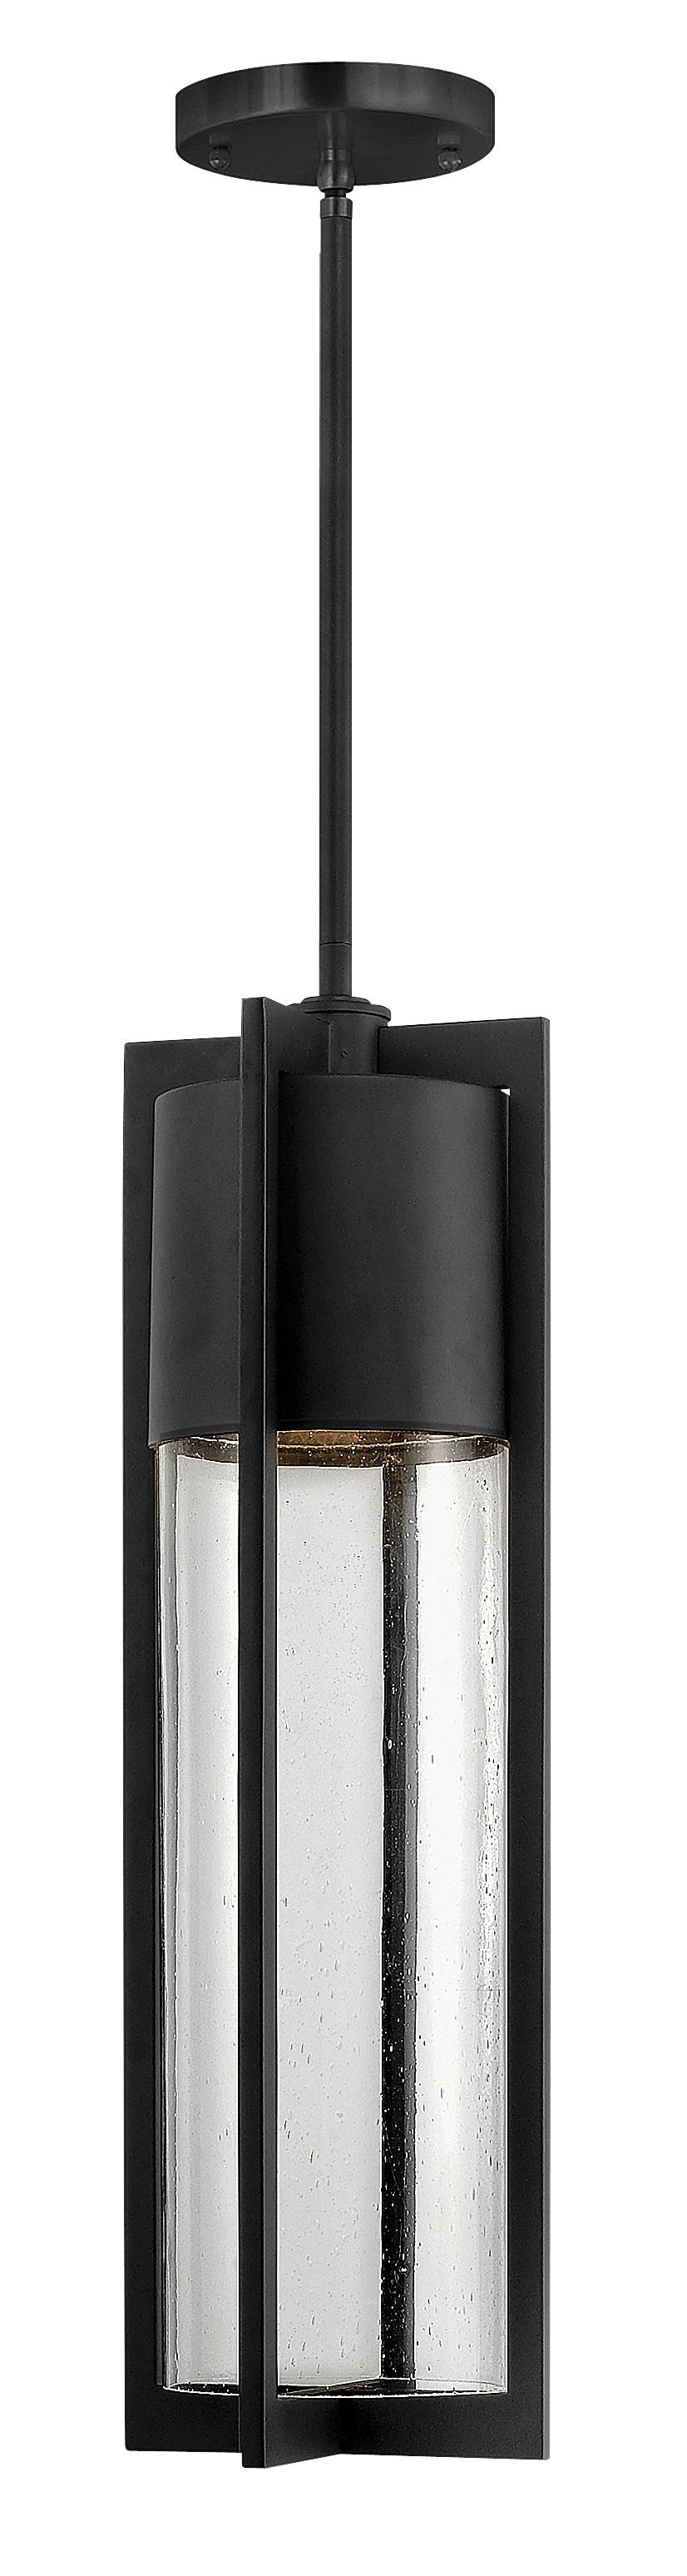 SHELTER Outdoor pendant Black INTEGRATED LED - 1322BK-LED | HINKLEY